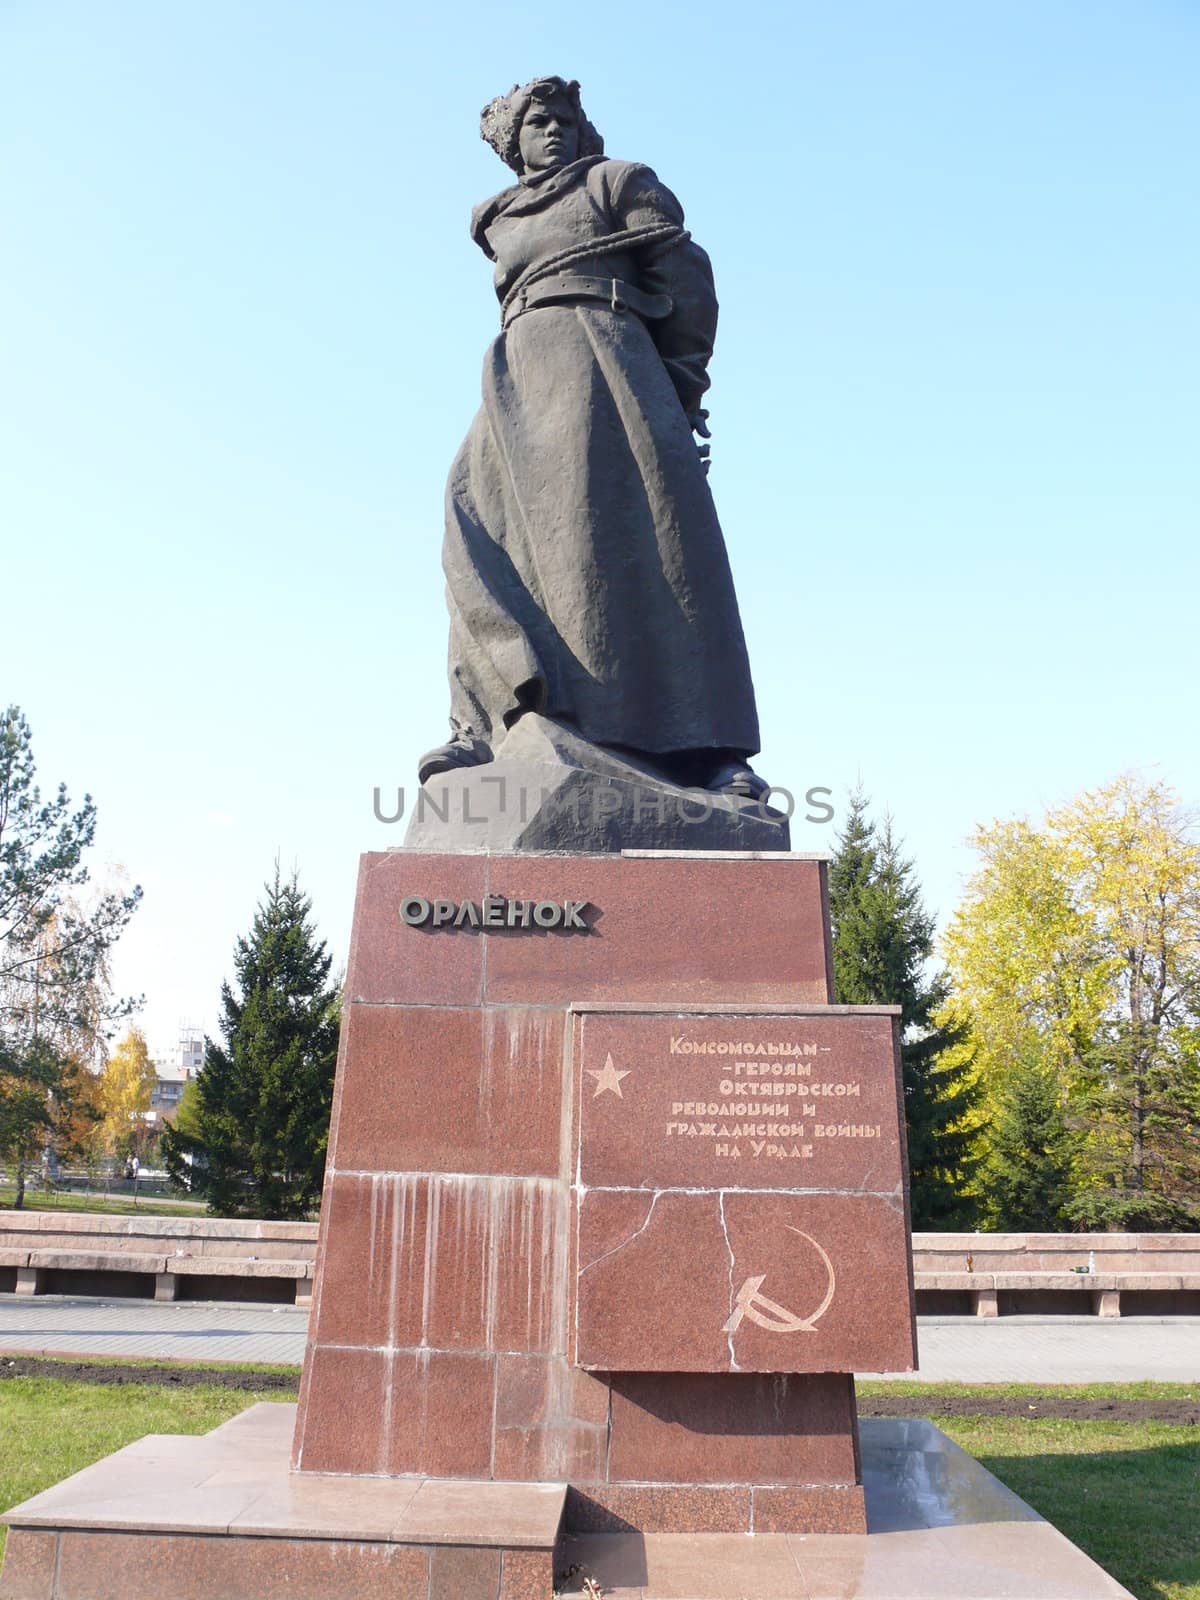 Monument Orlenok in Aloe pole - Chelyabinsk